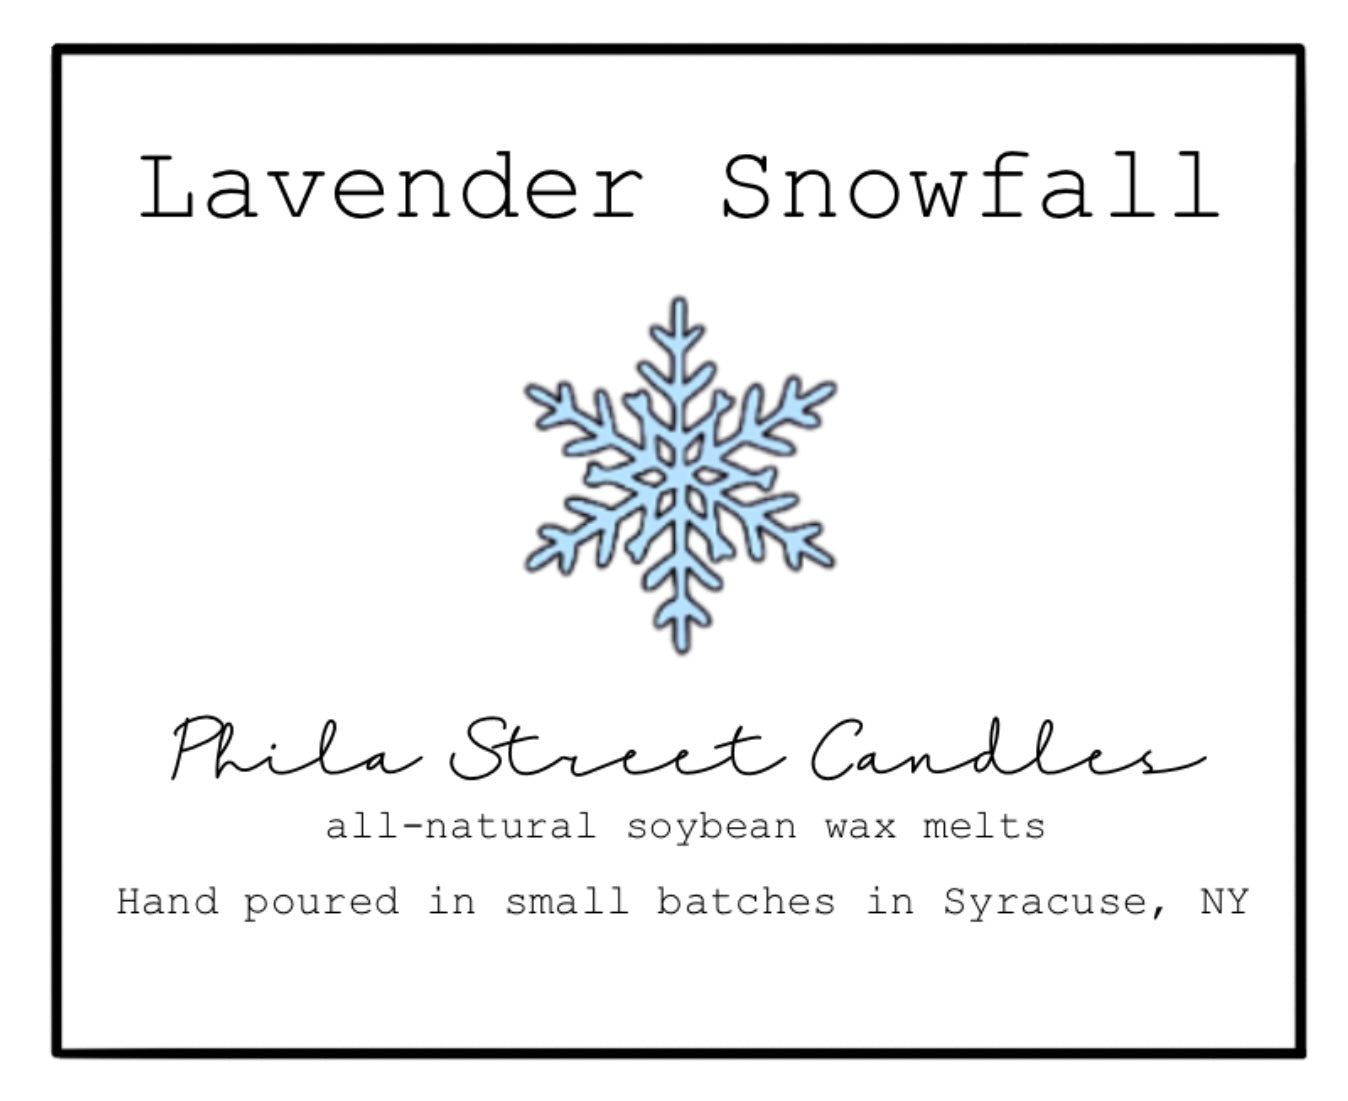 Lavender Snowfall wax melt